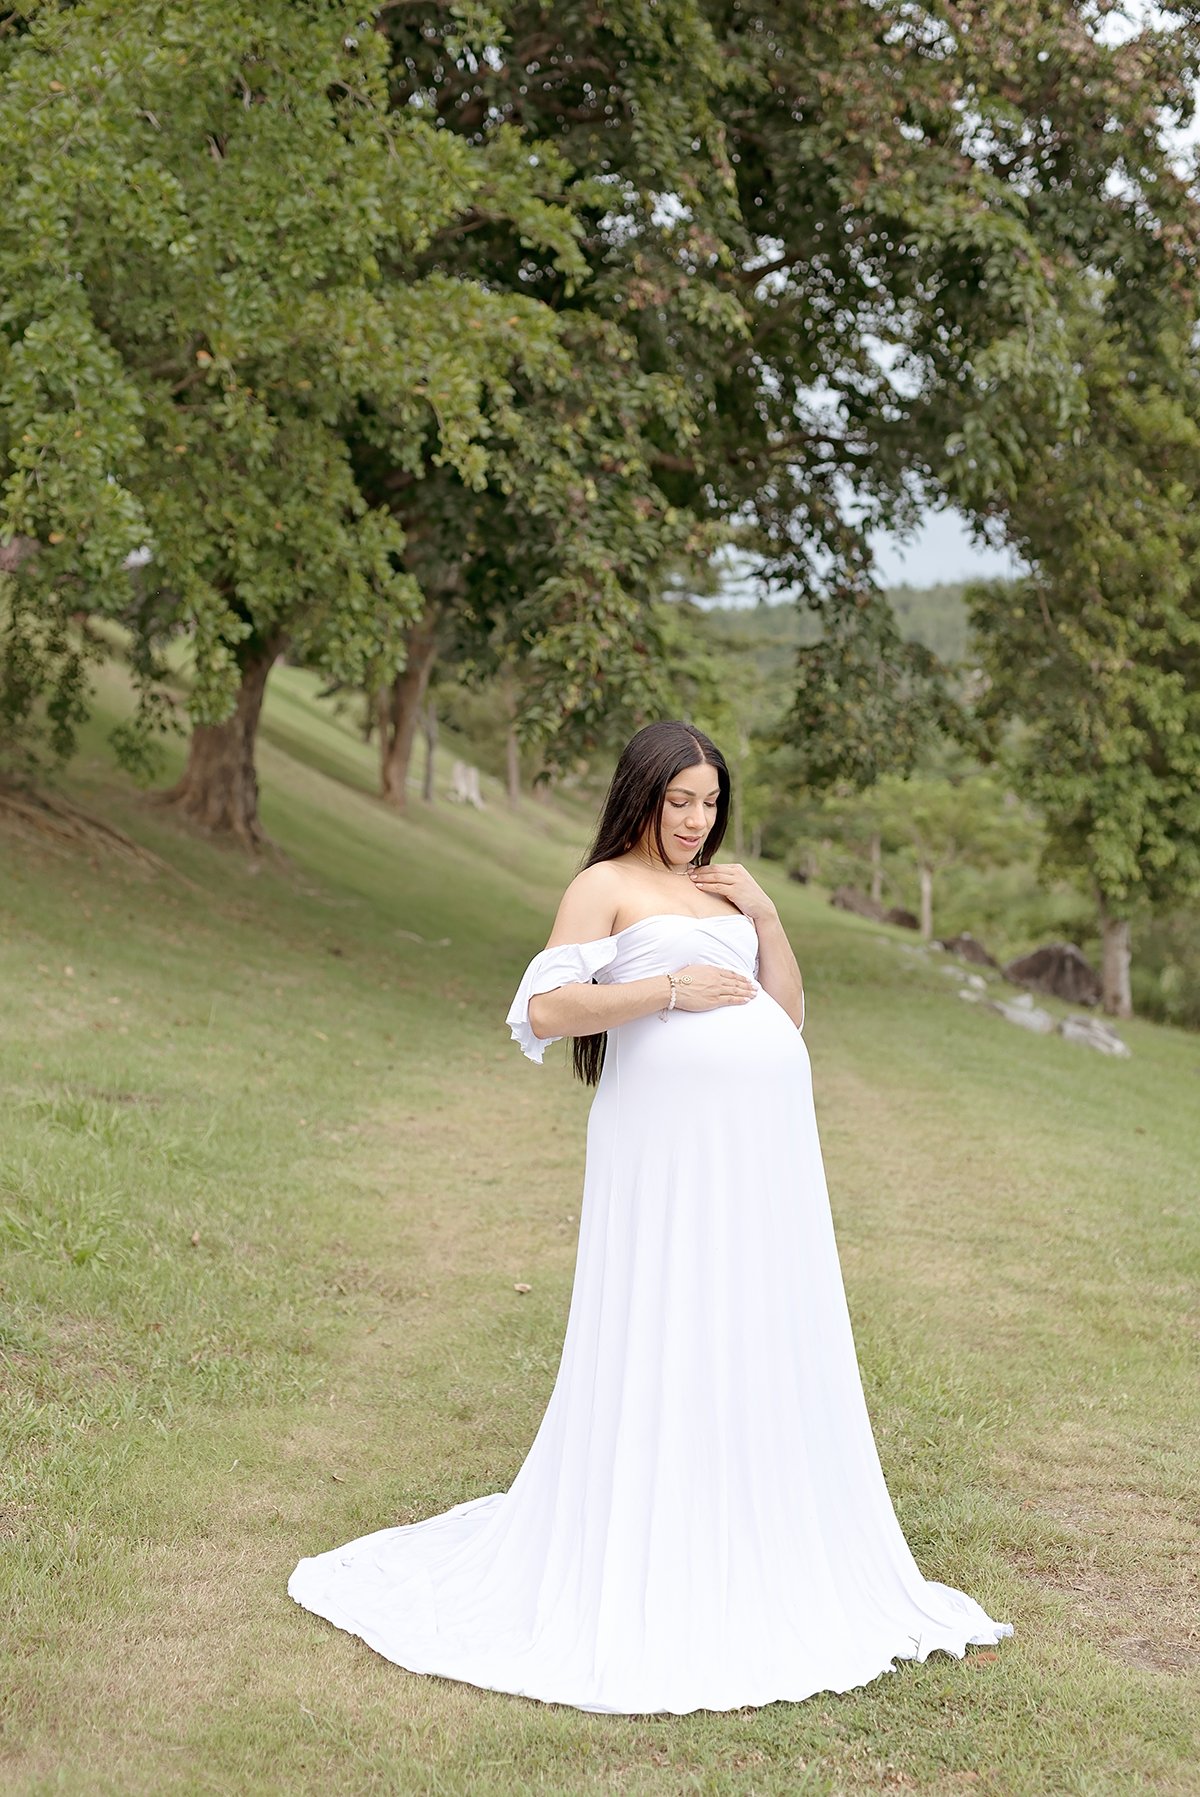 maternity-pregnancy-photographer-san-juan-puerto-rico-white-dress-gown-droop-sleeve-fotografa-maternidad-embarazo-07.jpg